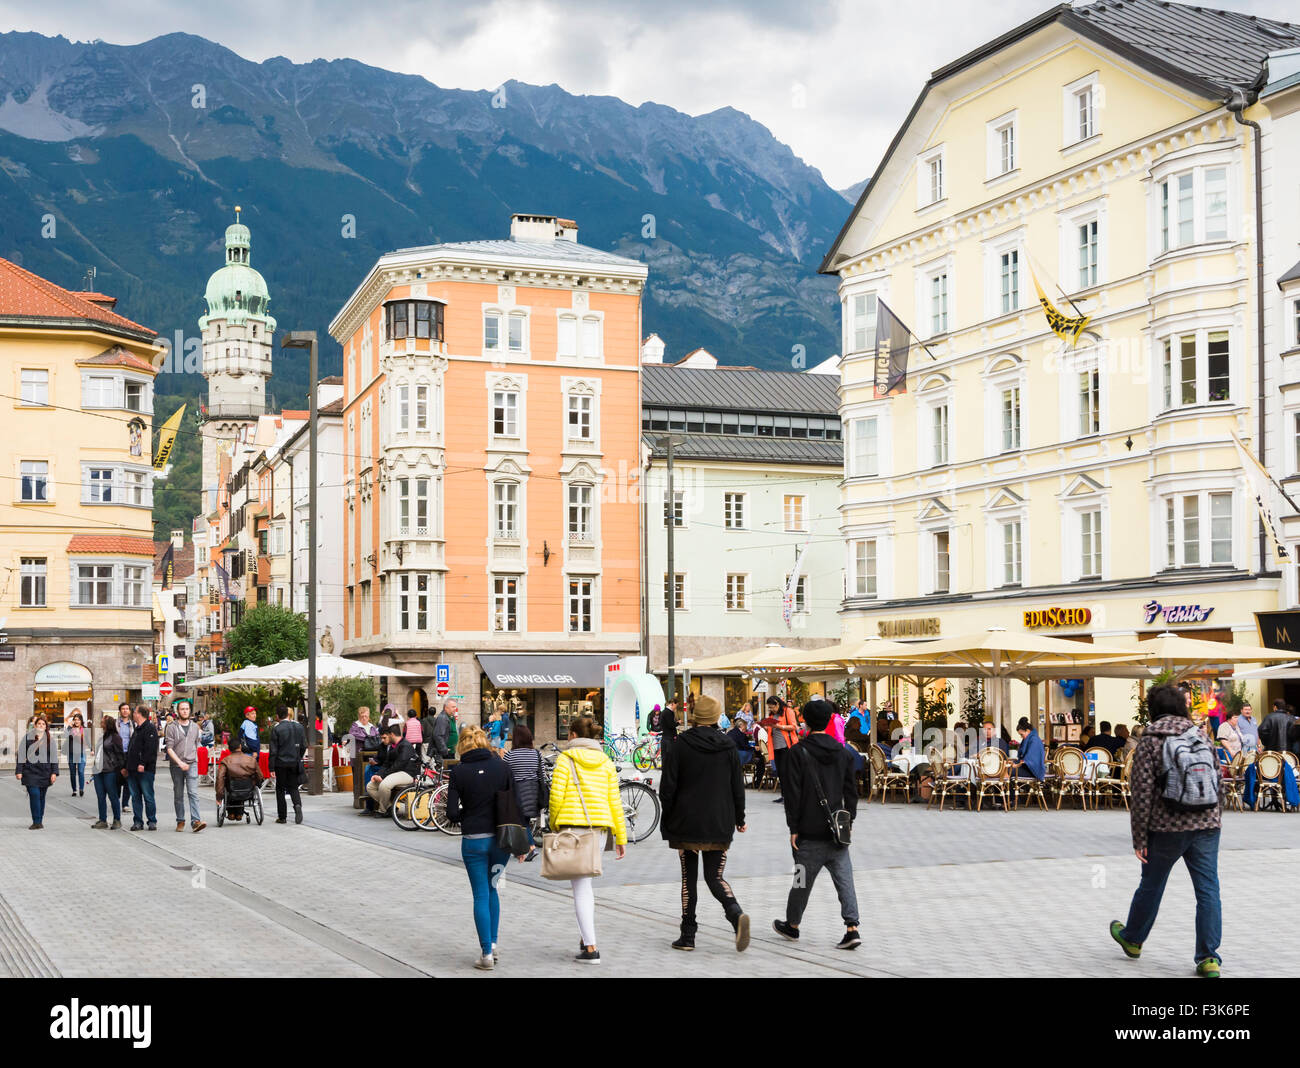 INNSBRUCK, AUSTRIA - SEPTEMBER 22: Tourists in the pedestrian area of Innsbruck, Austria on September 22, 2015. Stock Photo